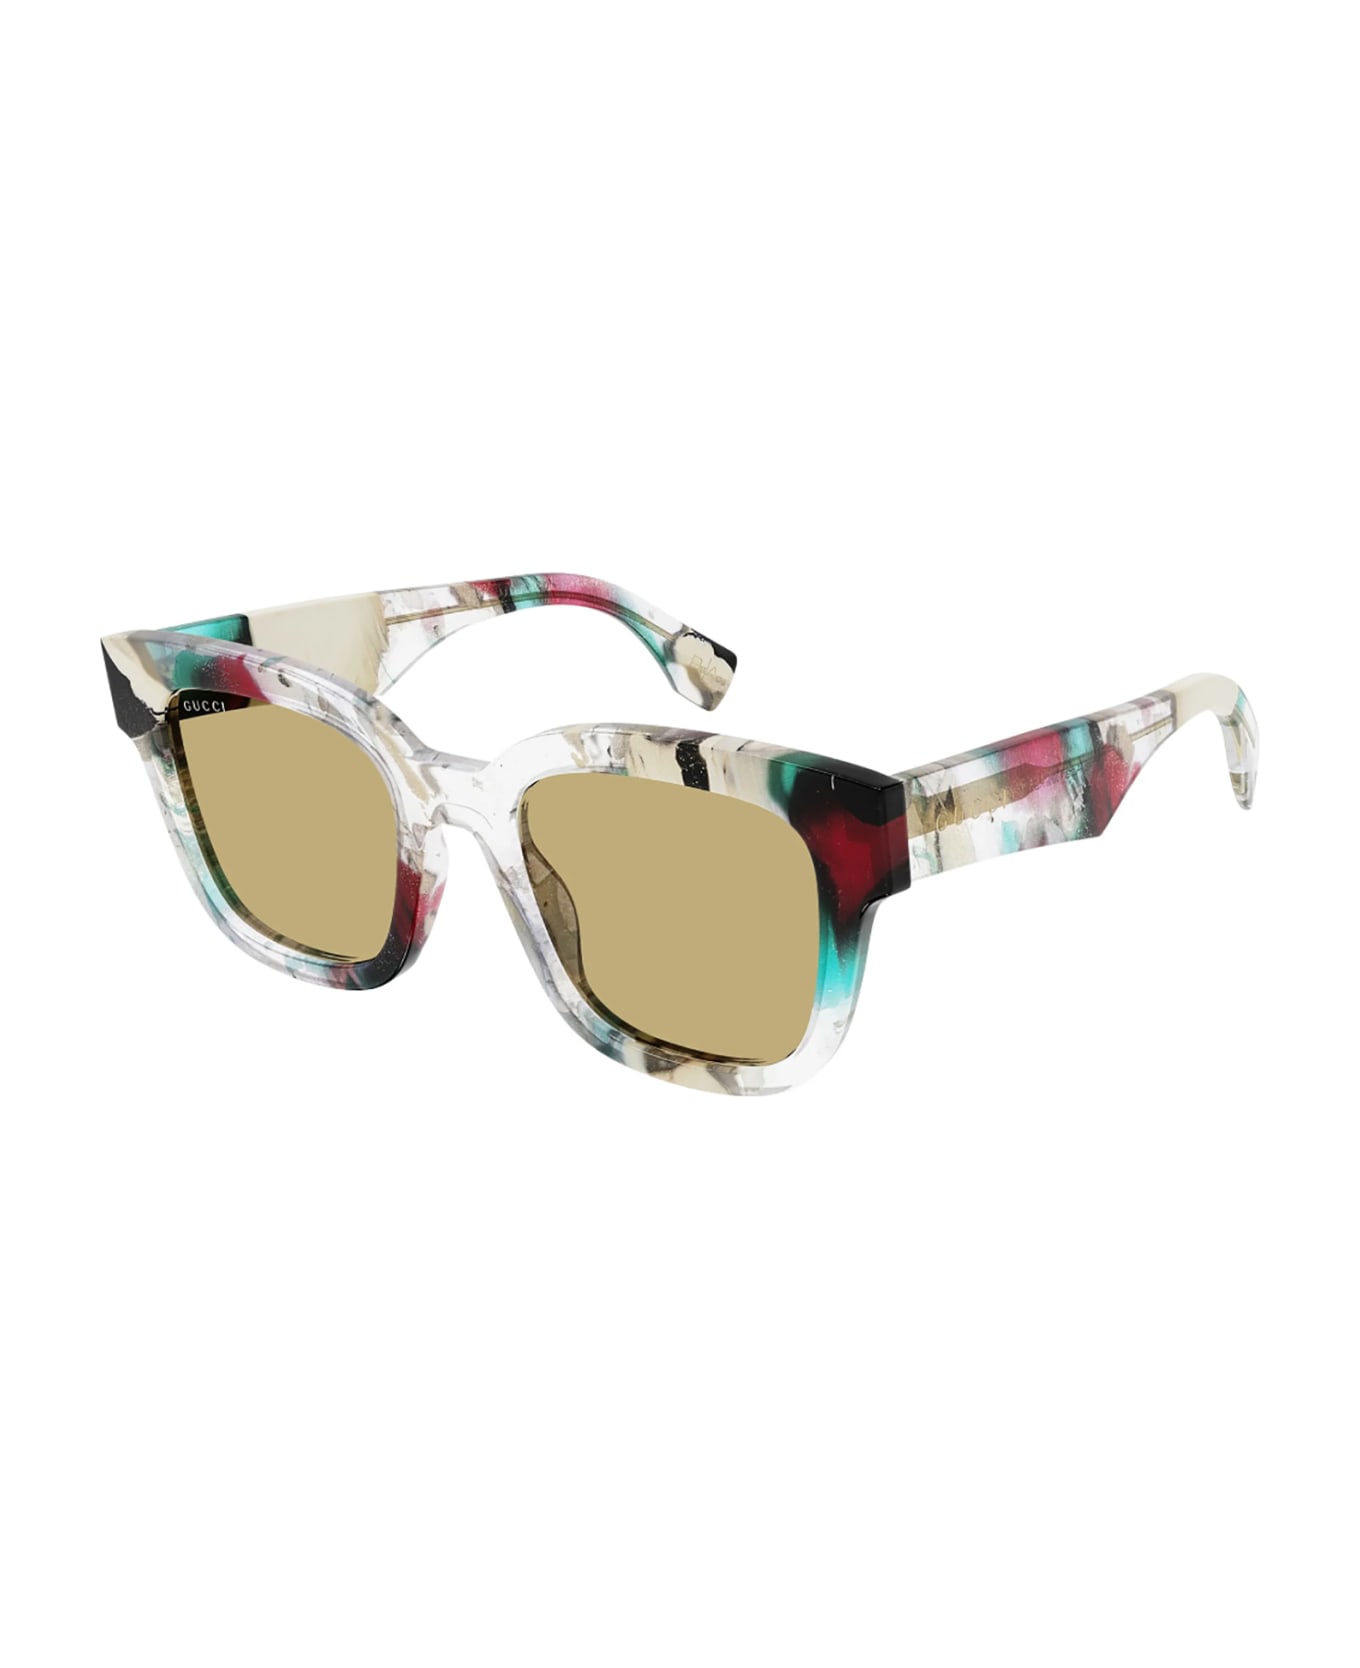 Gucci Eyewear GG1624S Sunglasses - Multicolor Multicolor サングラス